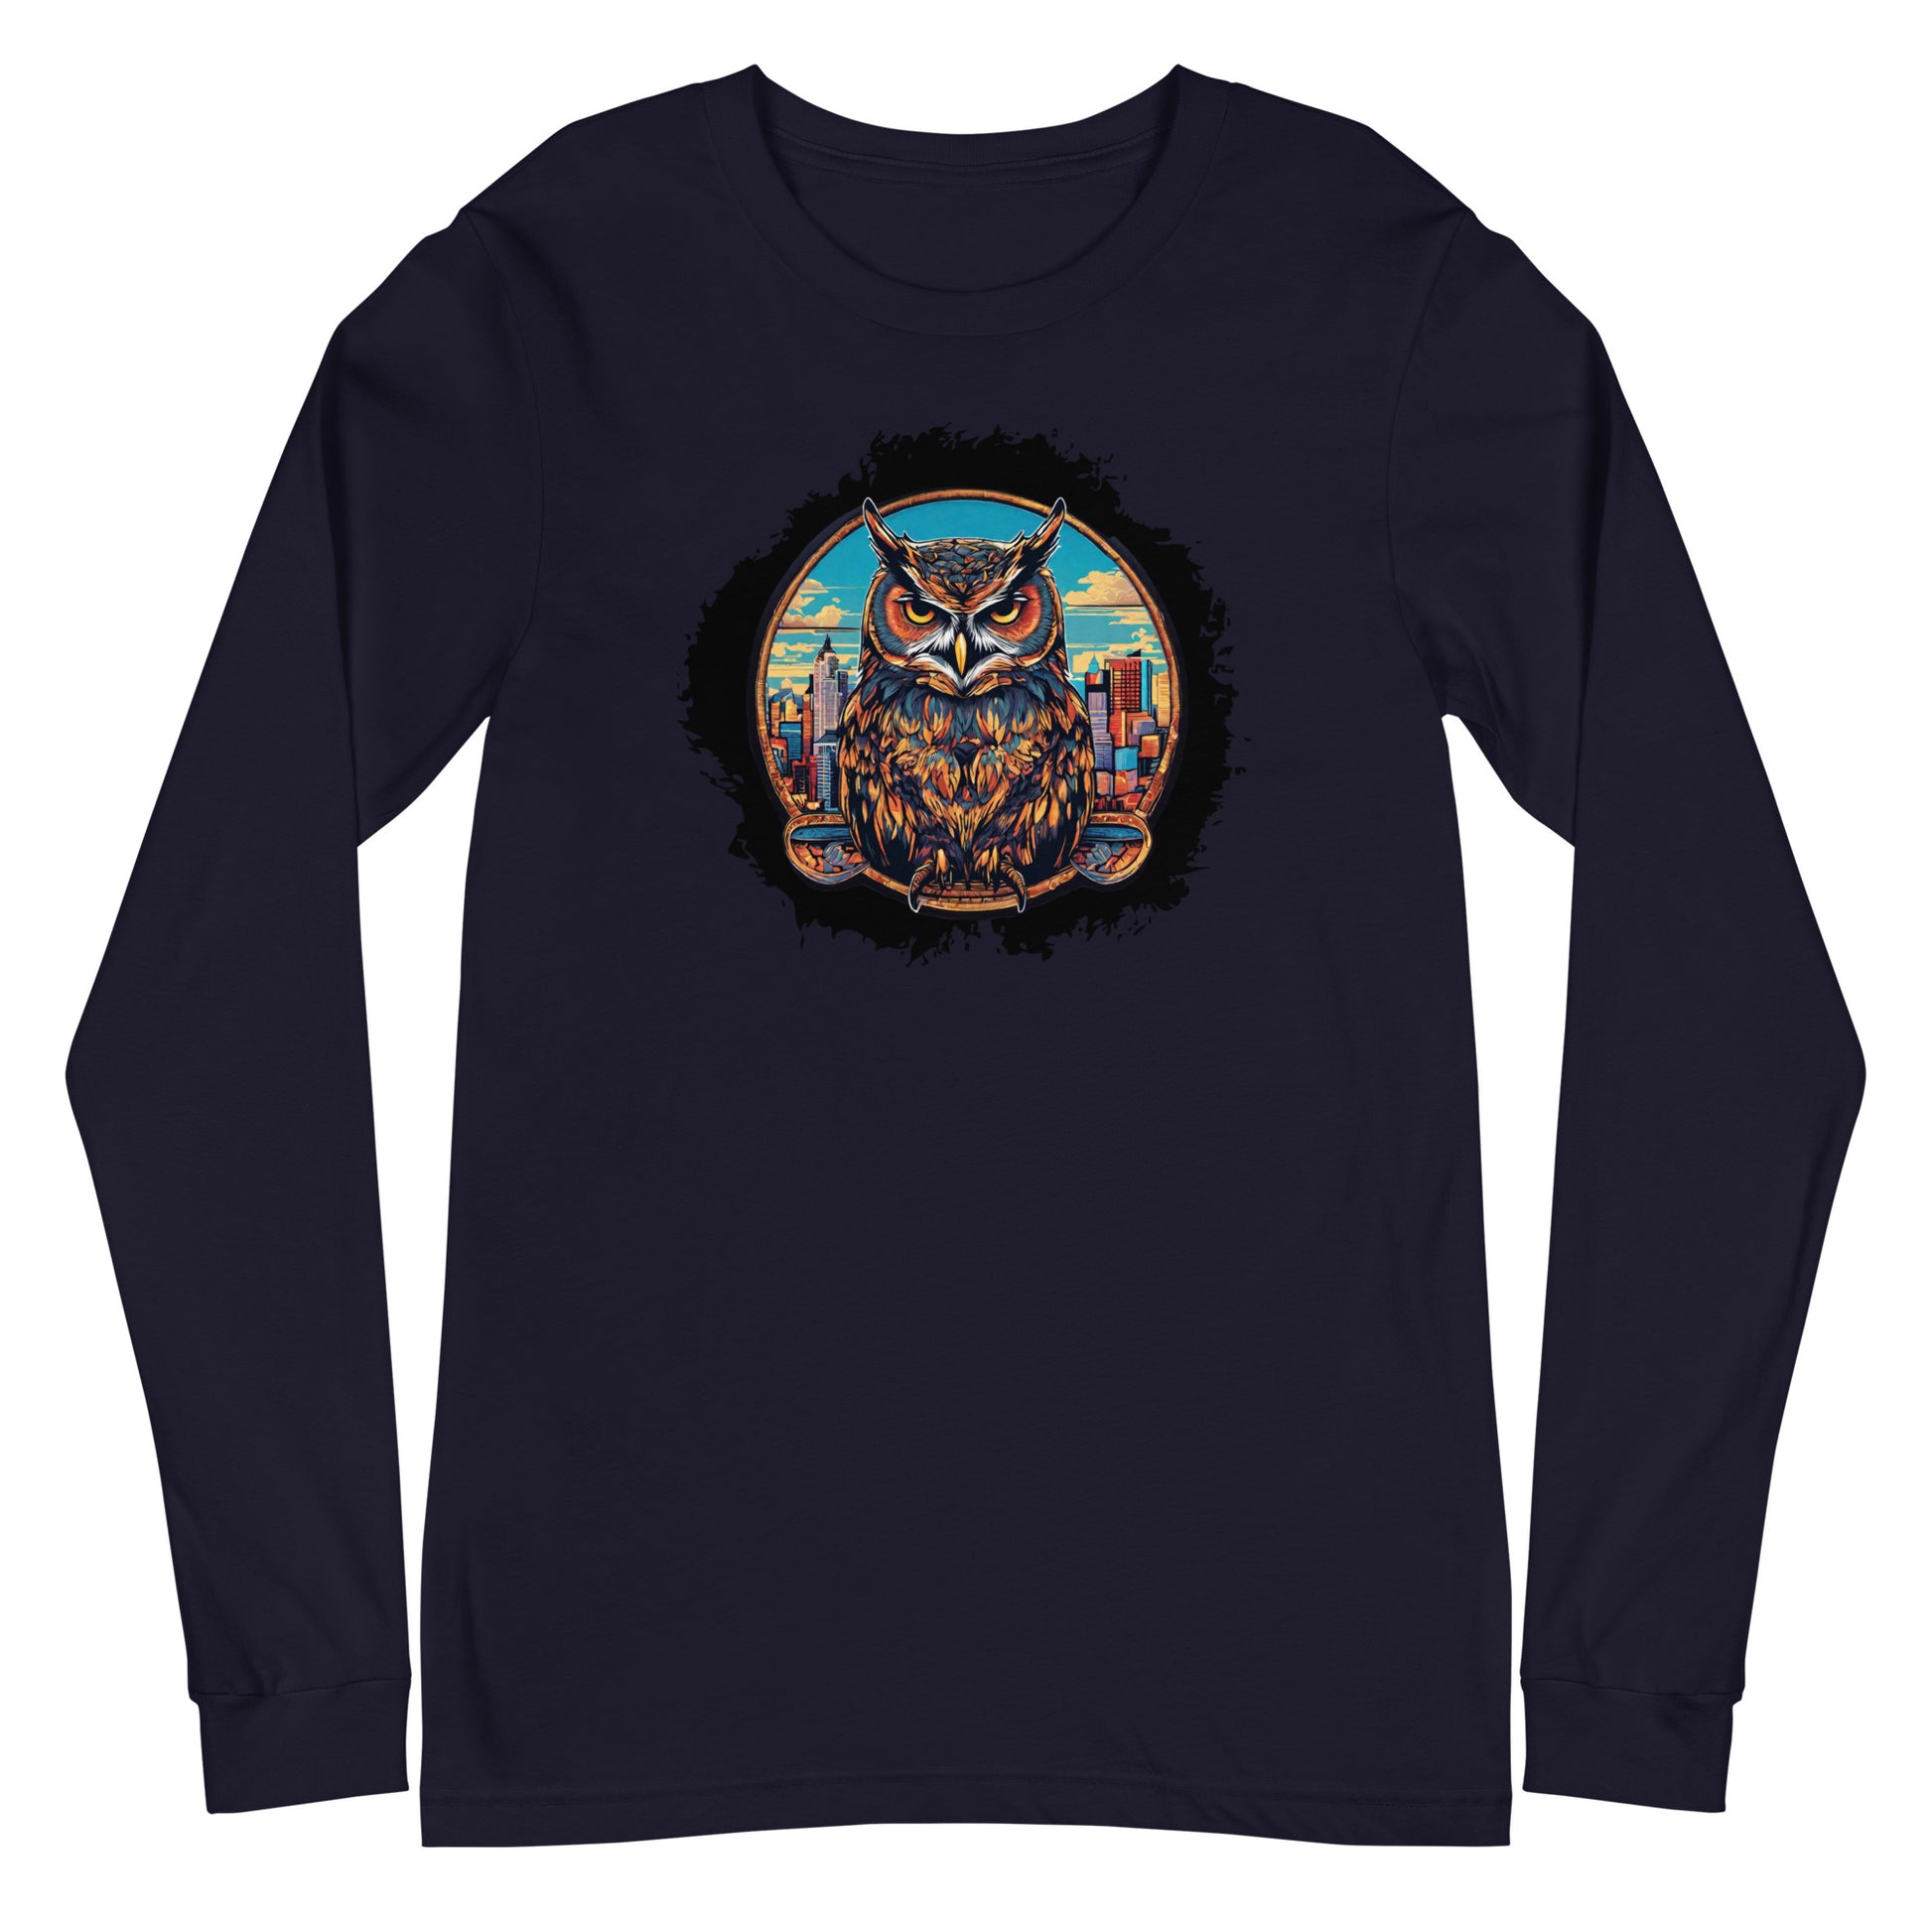 Owl in the City Emblem Long Sleeve Tee Navy